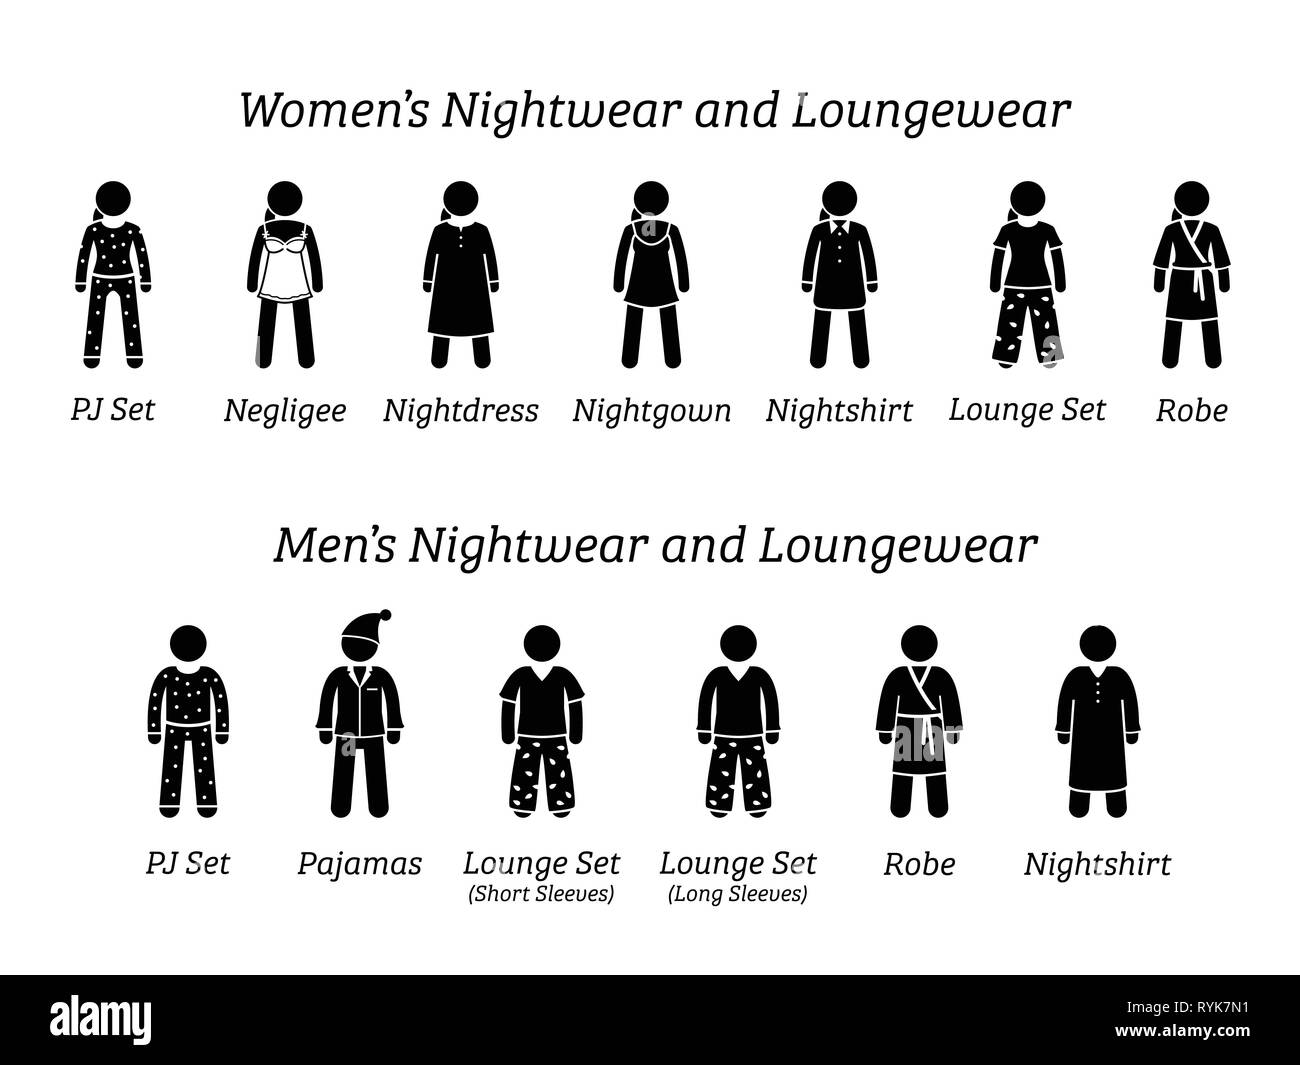 Men and women nightwear and loungewear fashion designs. Stick